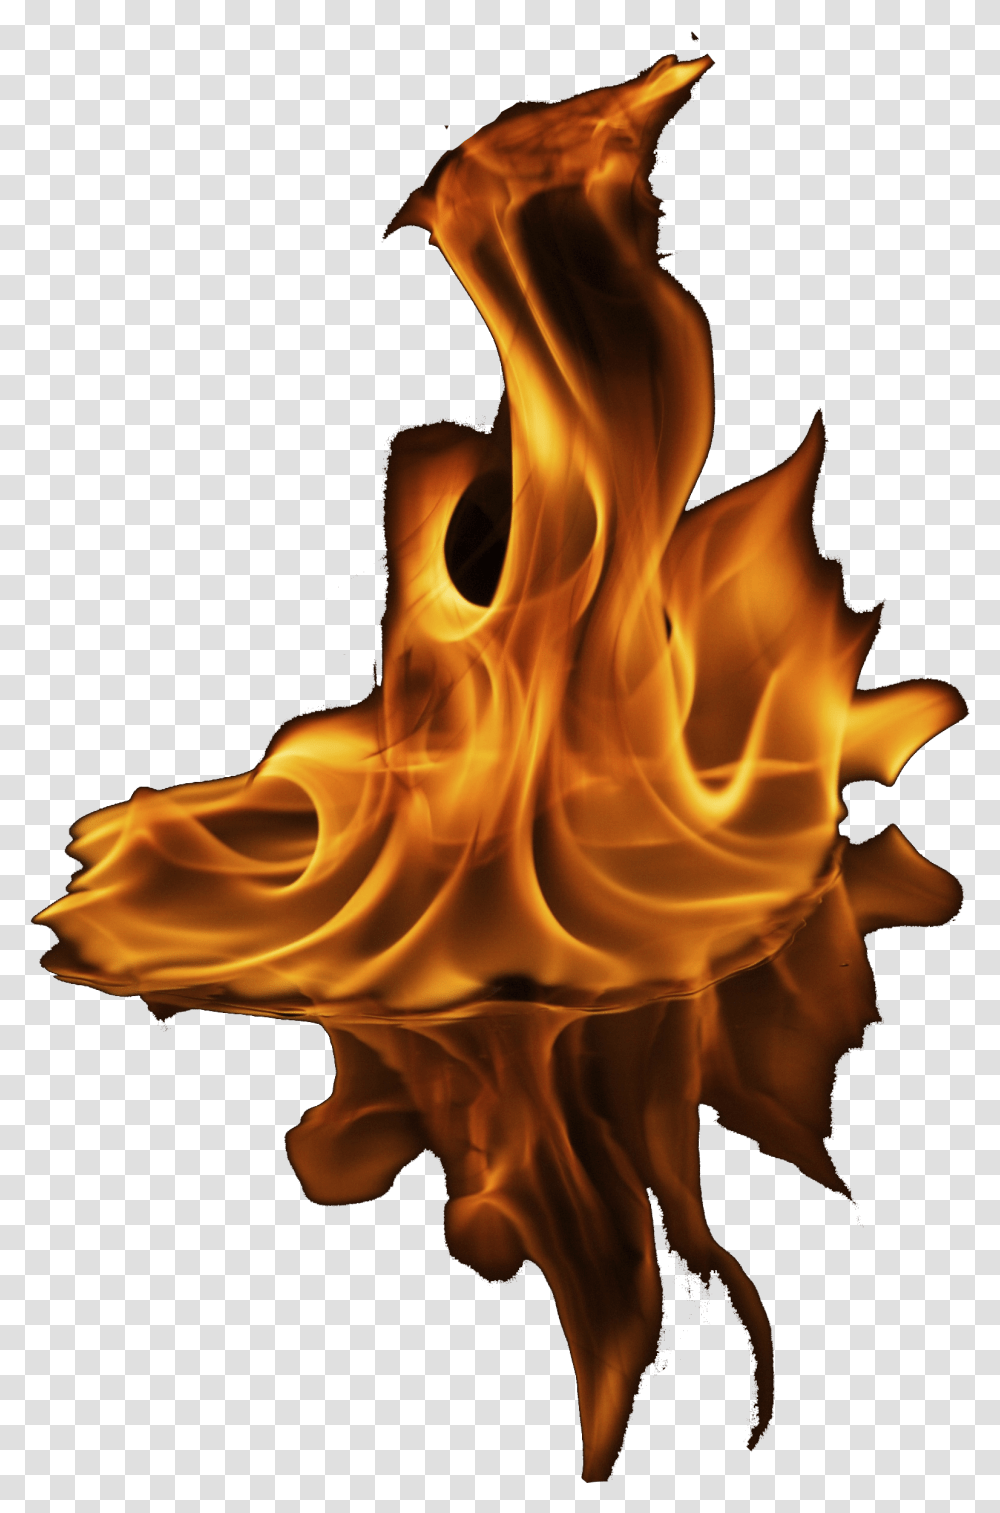 Backgrounds Hd Picture Flame, Fire, Person, Human, Bonfire Transparent Png